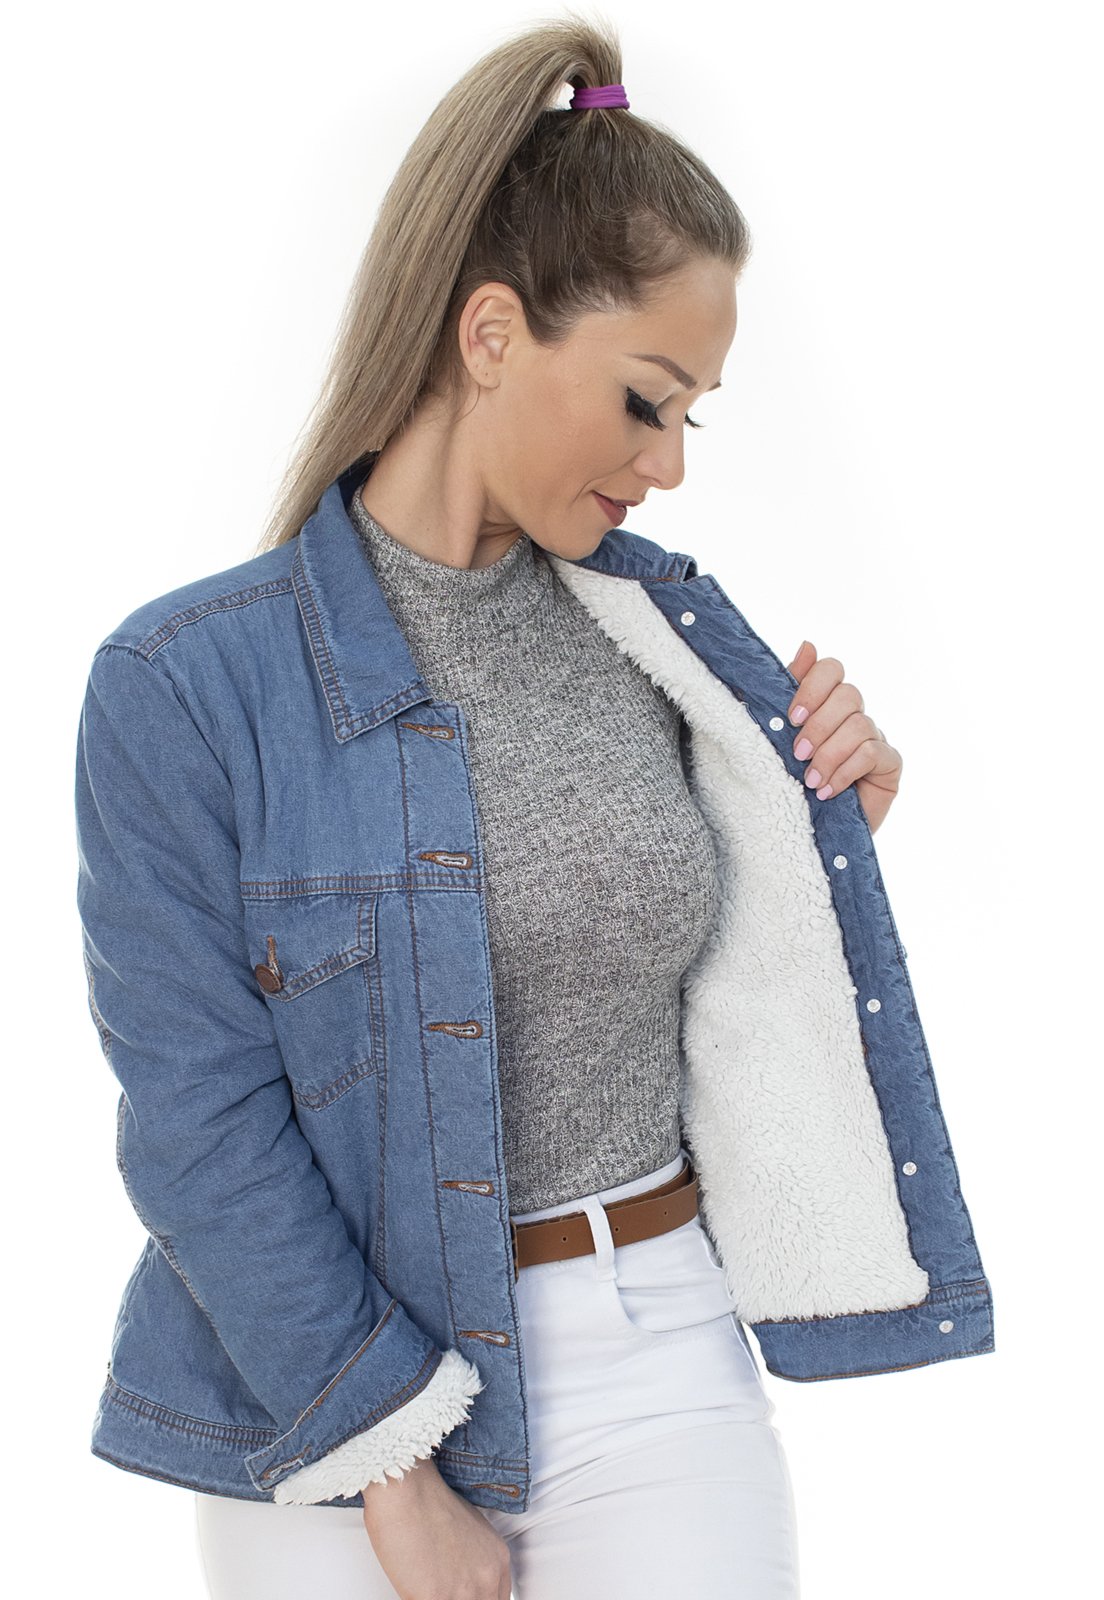 jaqueta jeans feminina forrada